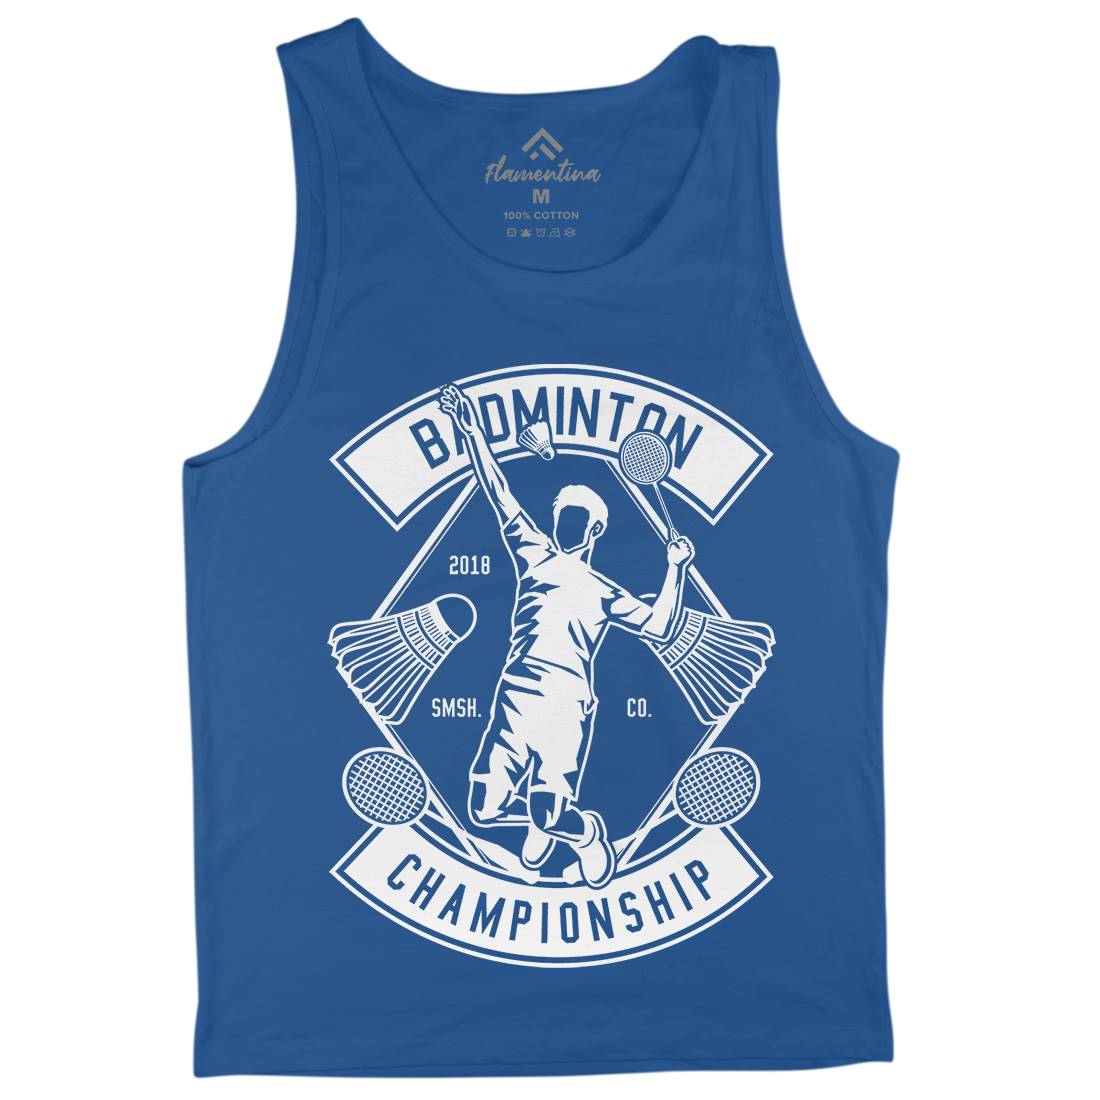 Badminton Championship Mens Tank Top Vest Sport B486